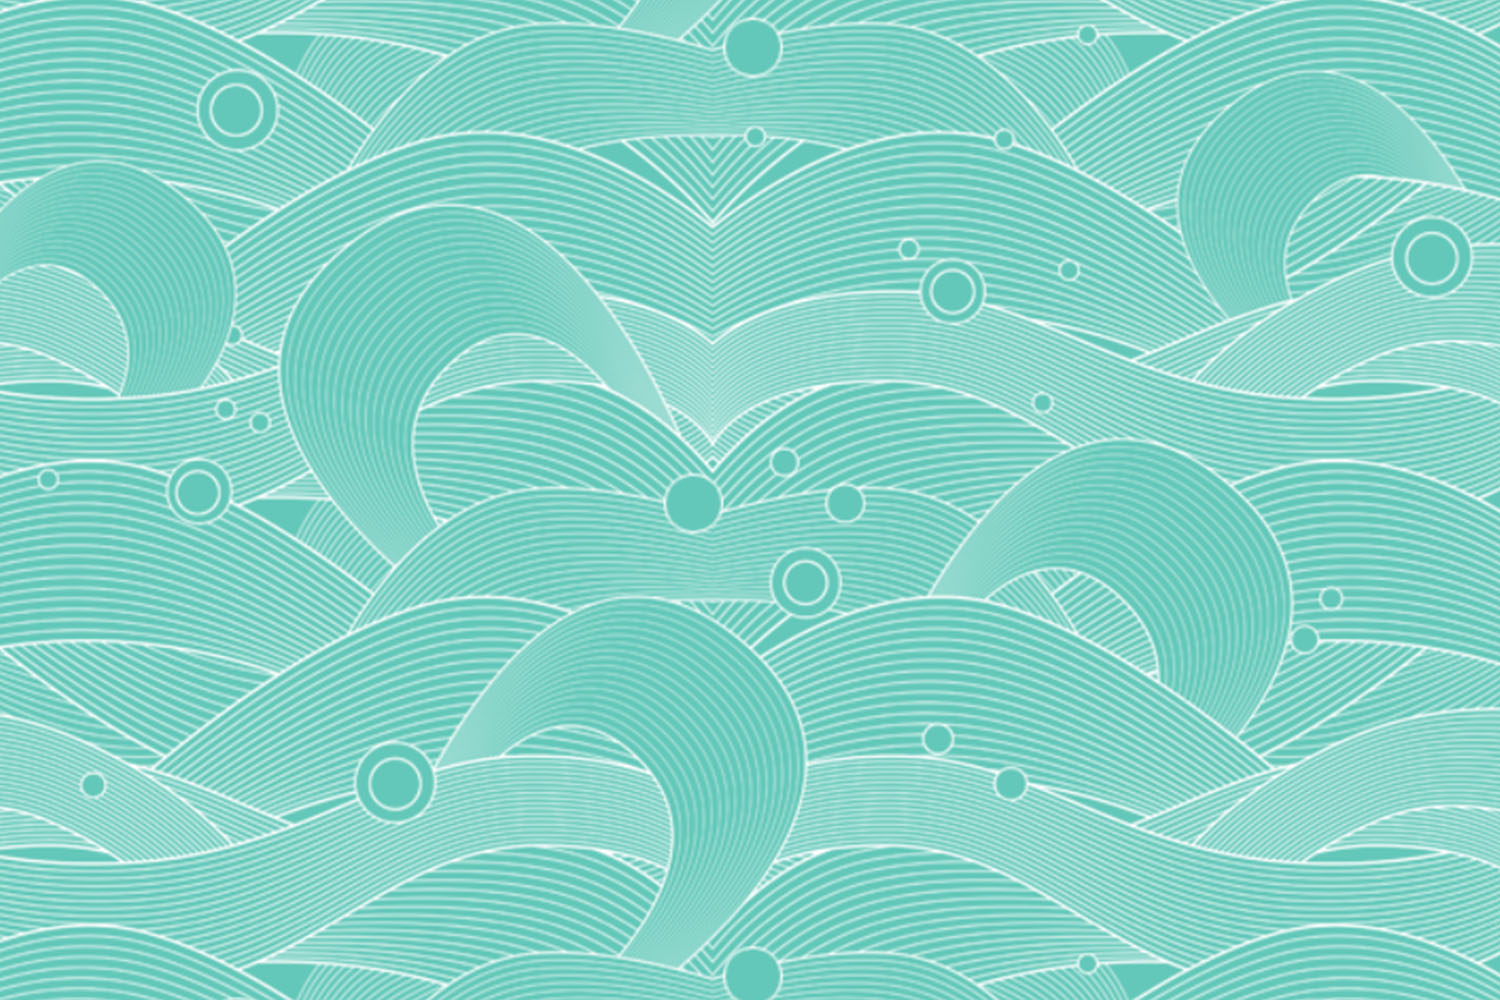 Waves Patterns Download